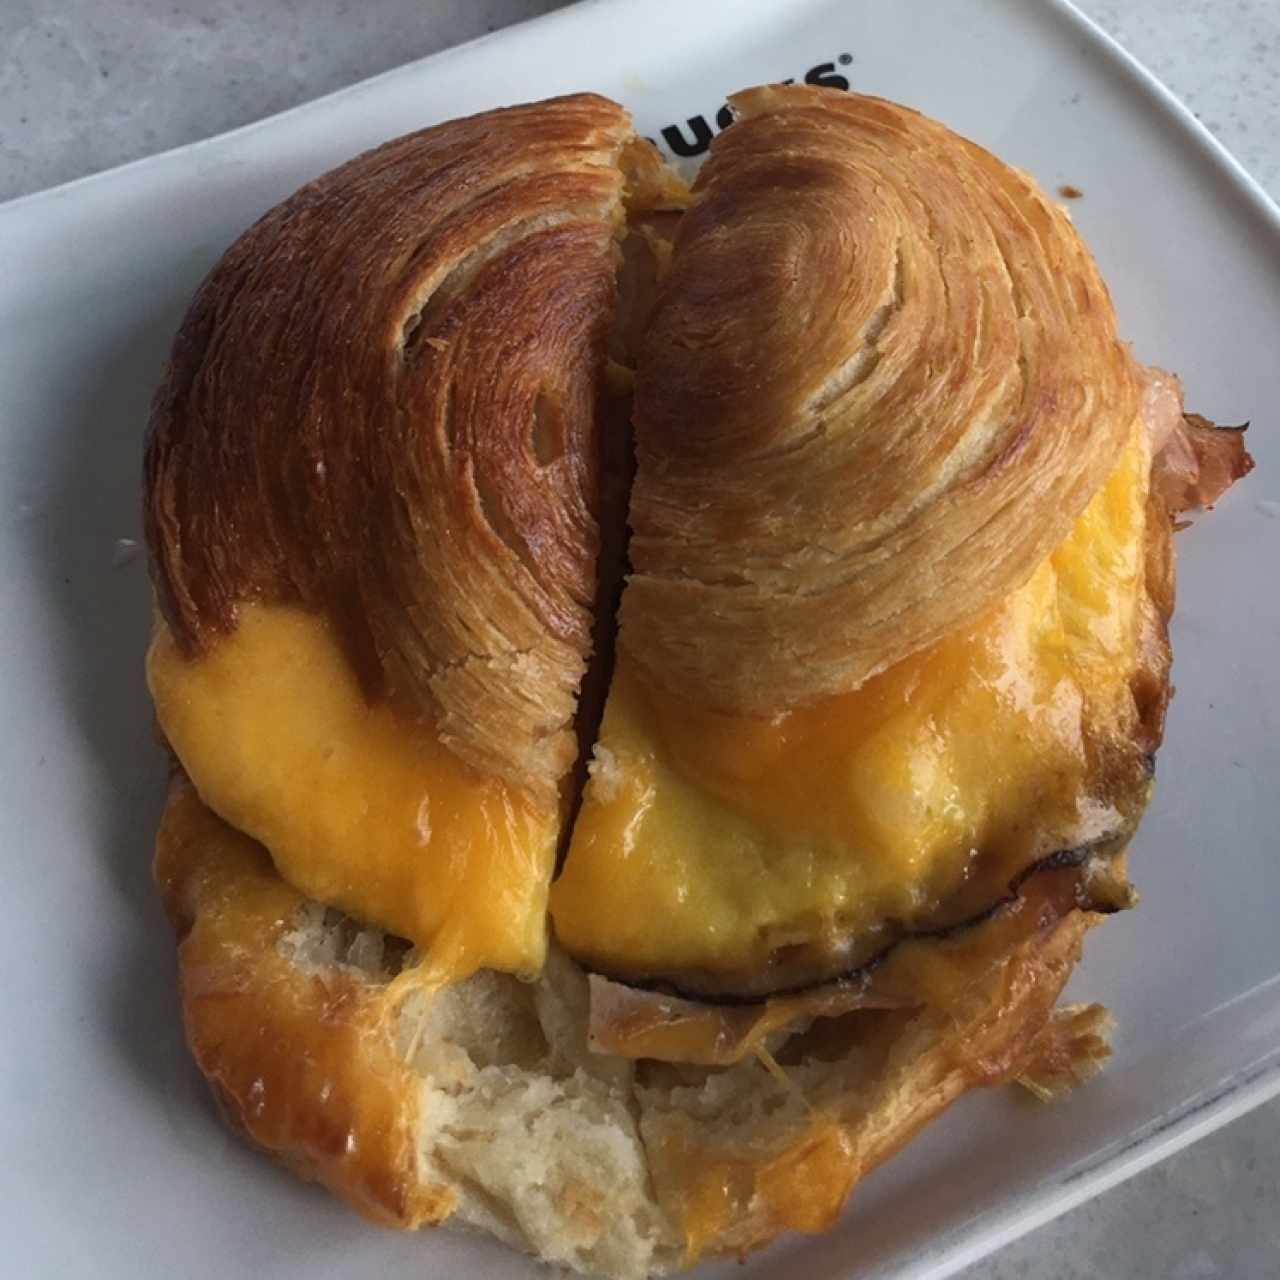 Ham and cheese breakfast sandwich